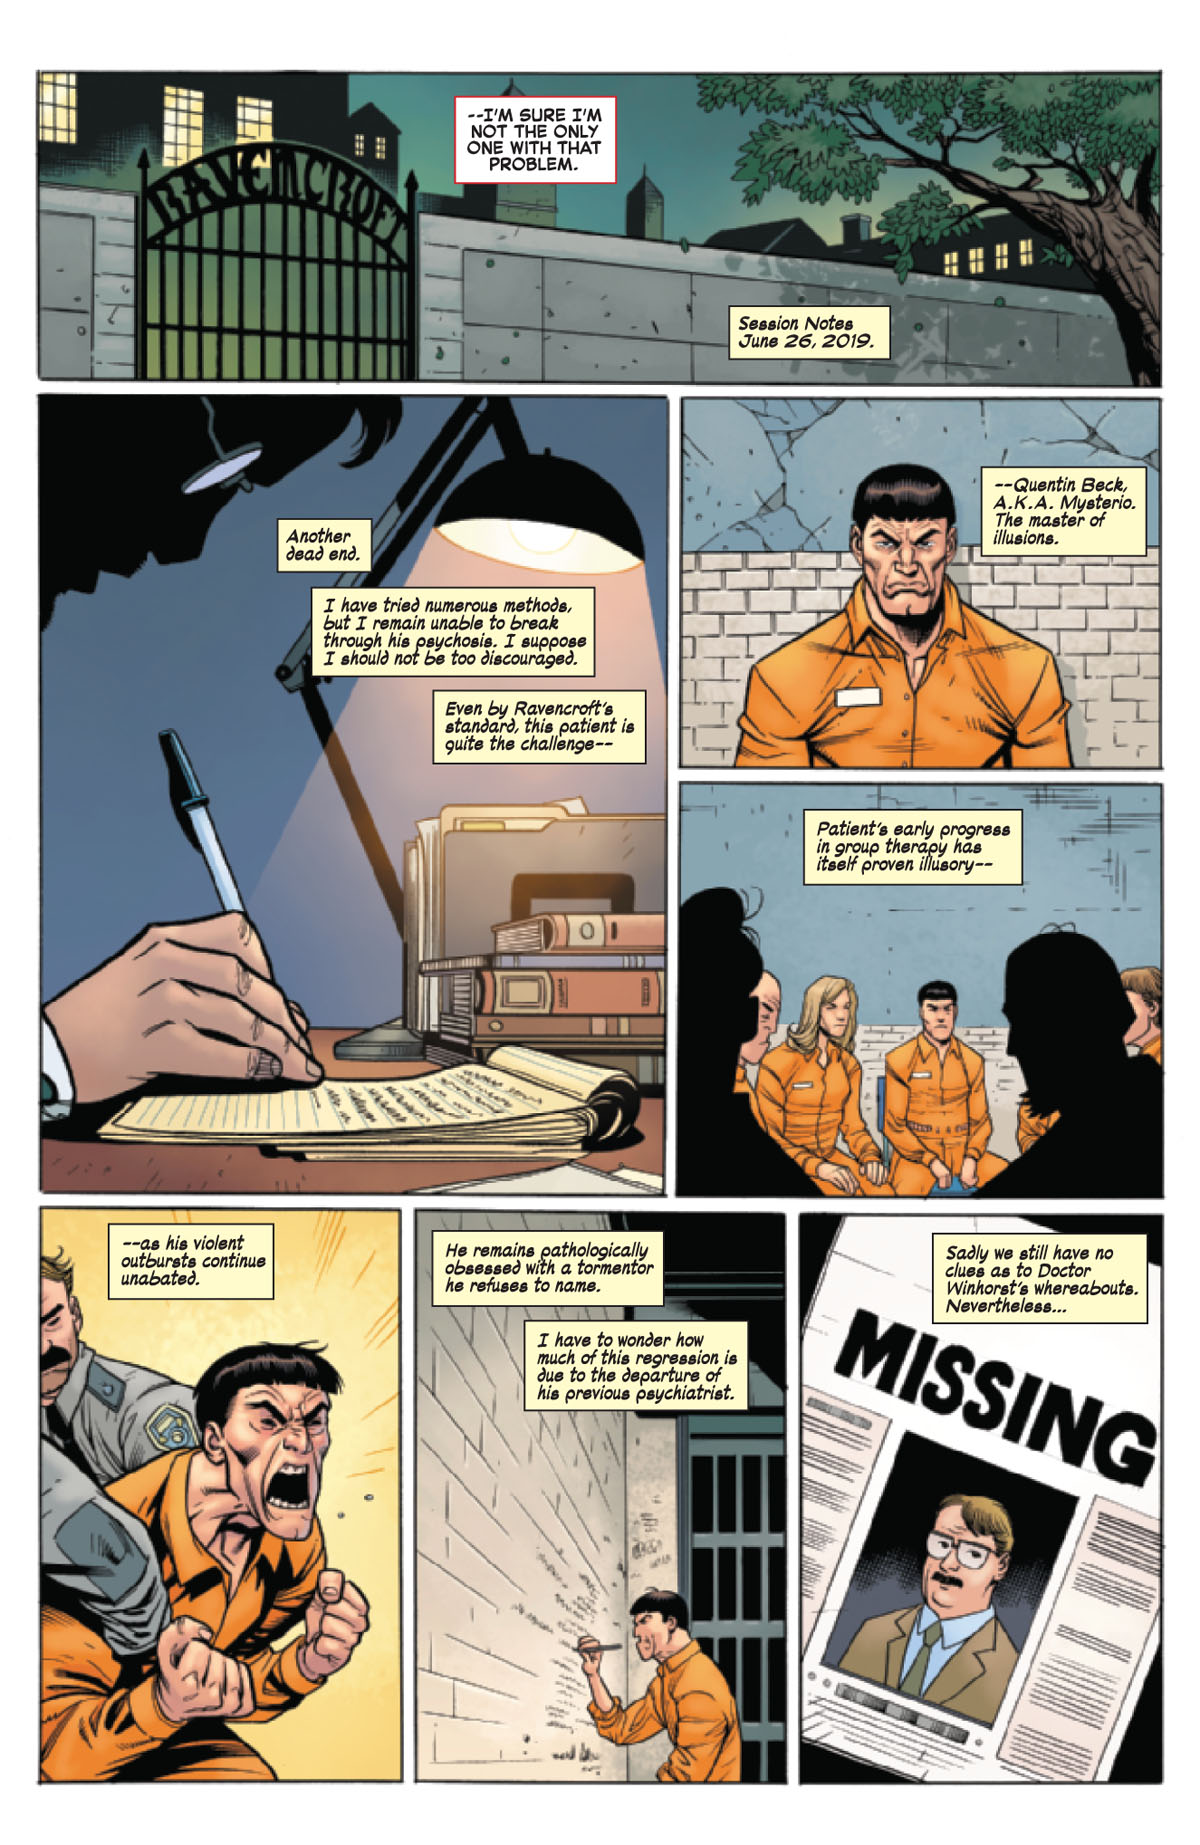 Amazing Spider-Man #24 page 5